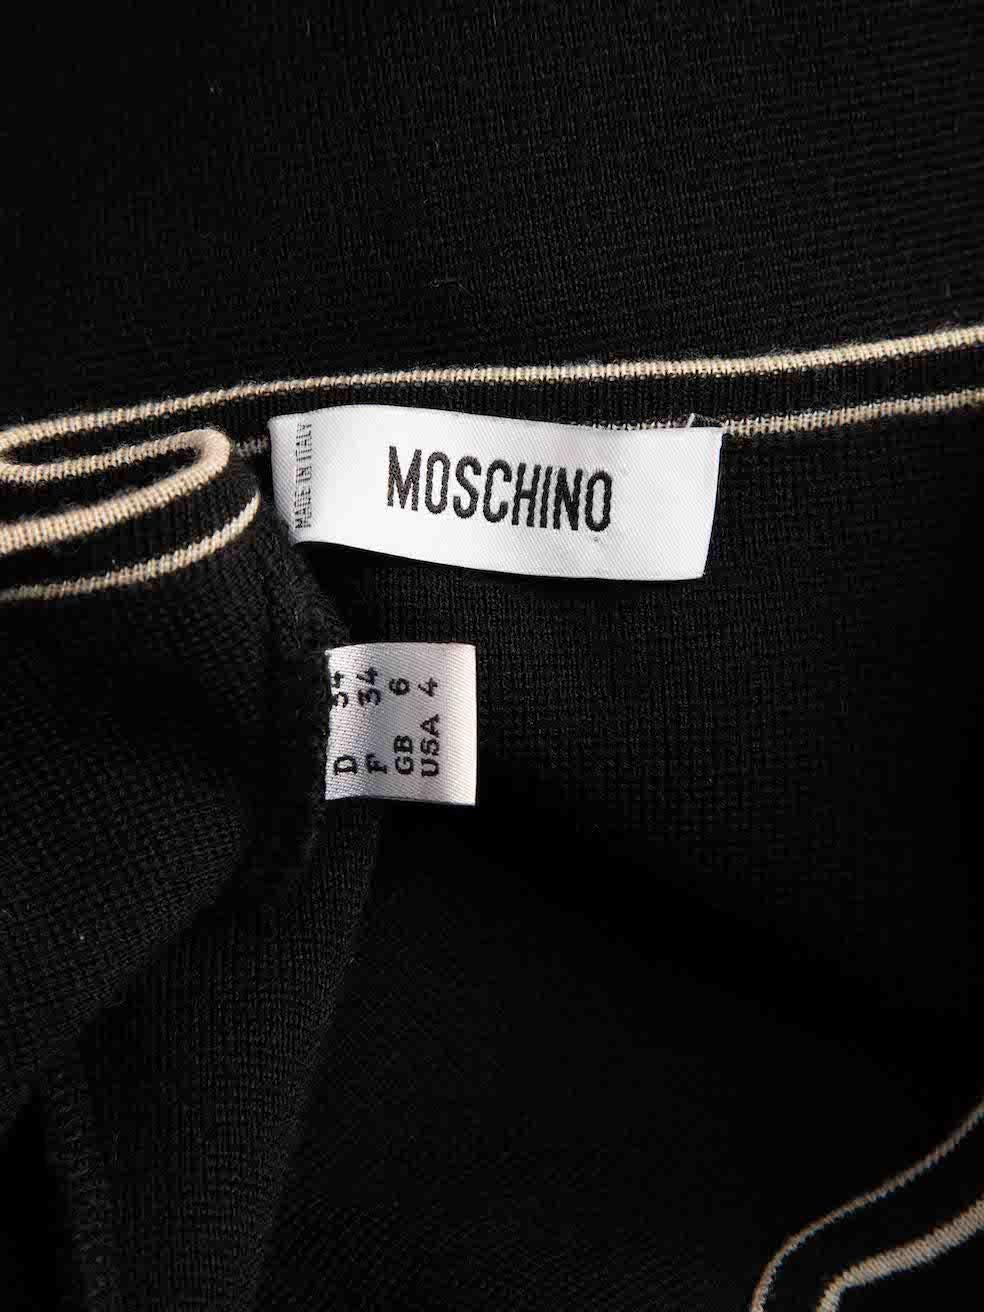 Moschino Women's Black Contrast Stitch Accent Knit Dress 2